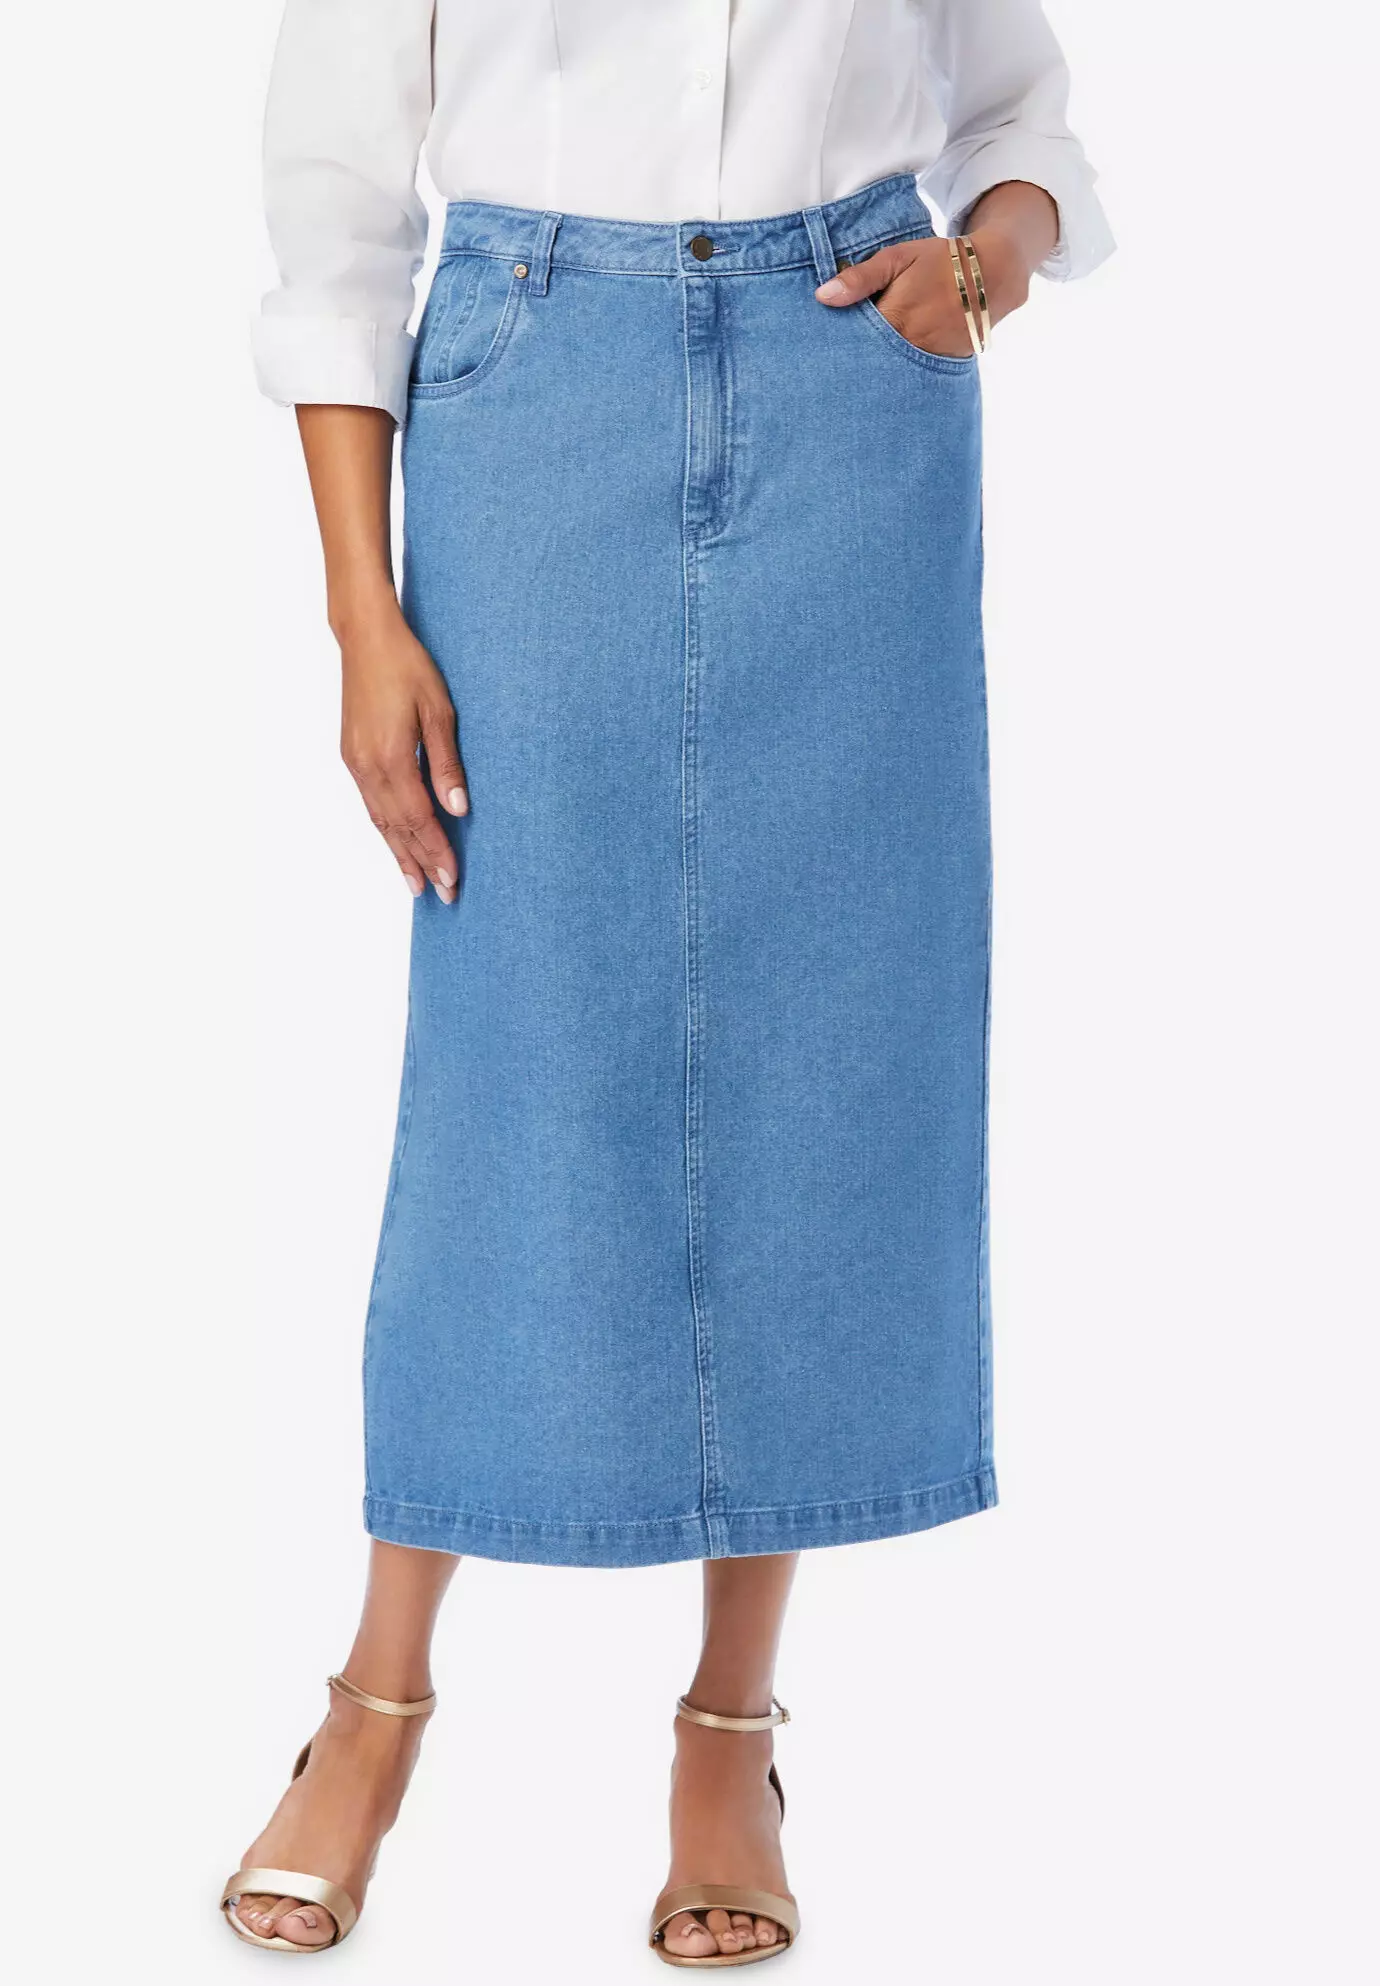 denim jean: Women's Skirts | Dillard's